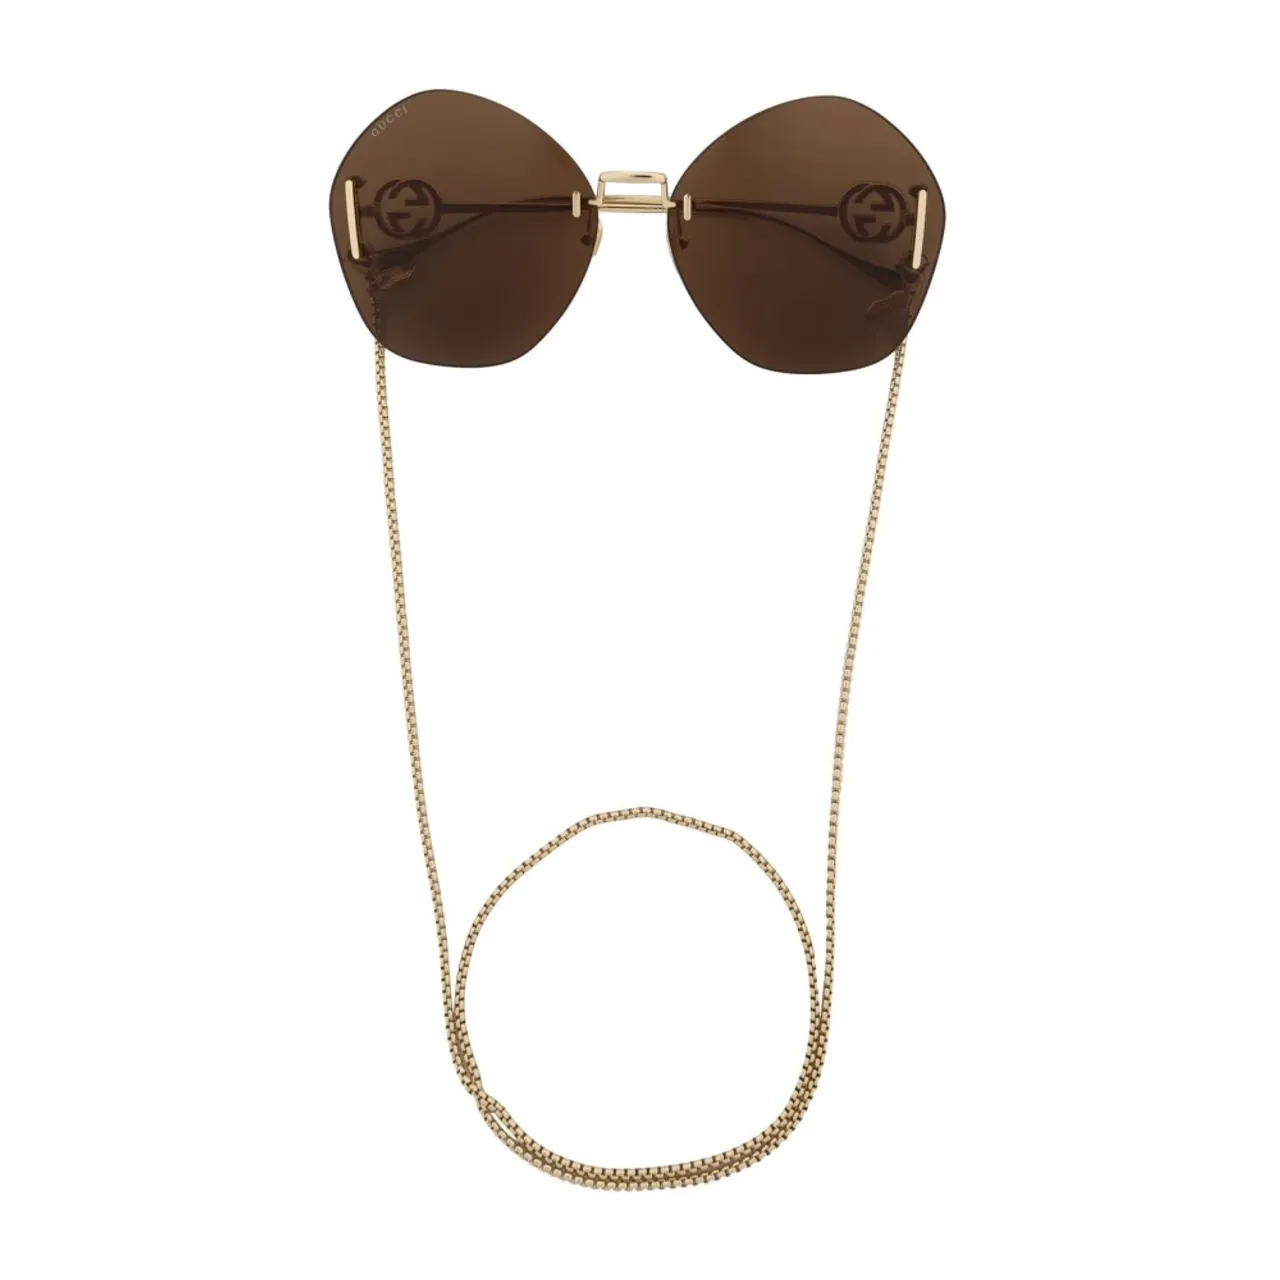 Gold/Violette Sonnenbrille mit Goldkette,GG1203S 003 Sunglasses Gucci